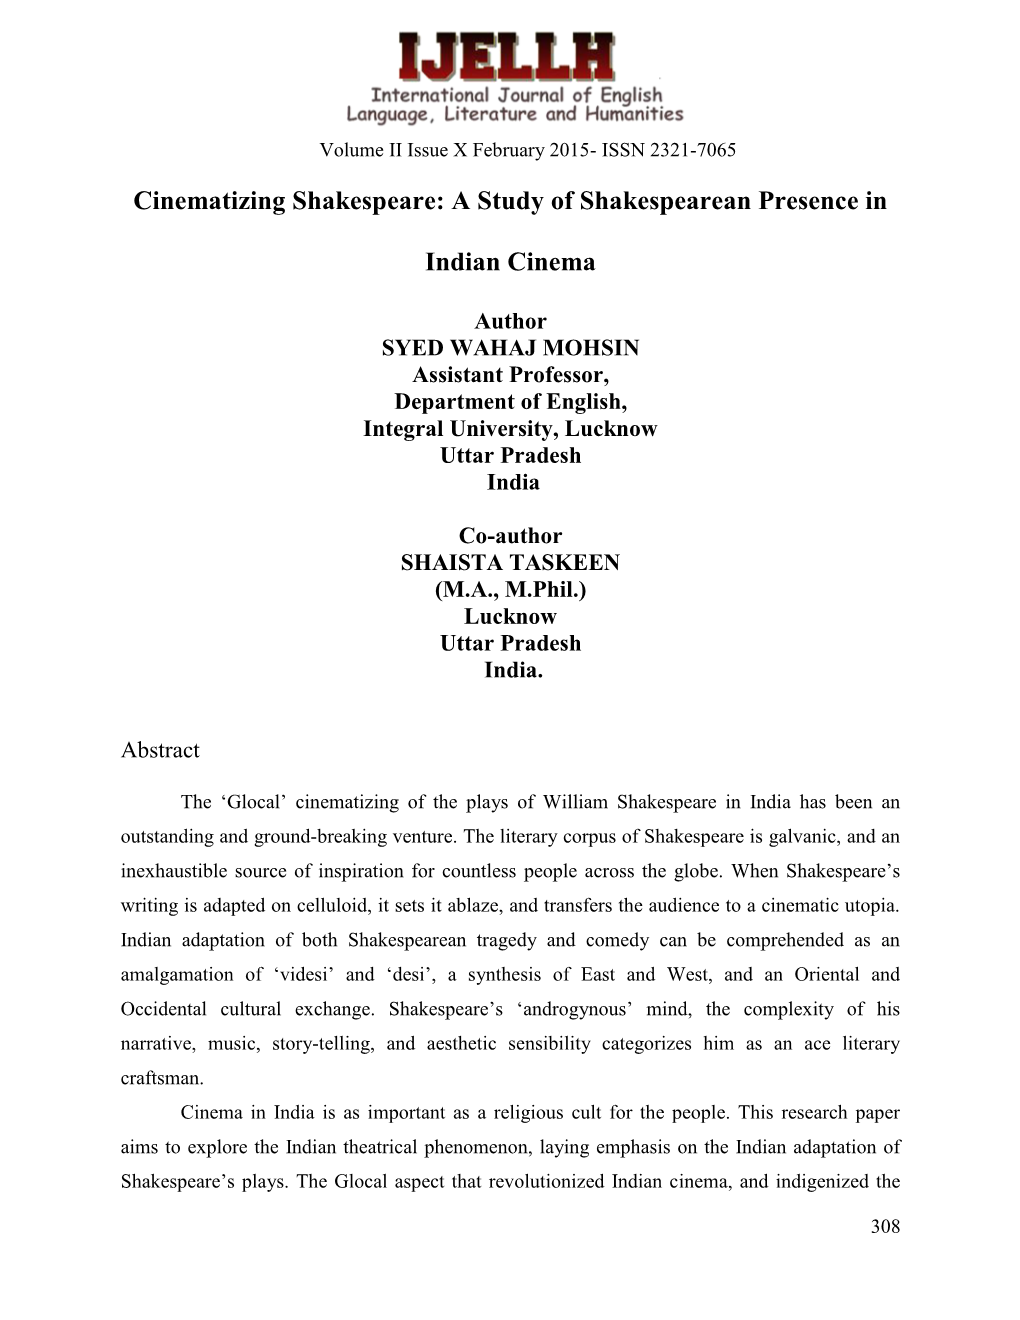 Cinematizing Shakespeare: a Study of Shakespearean Presence In